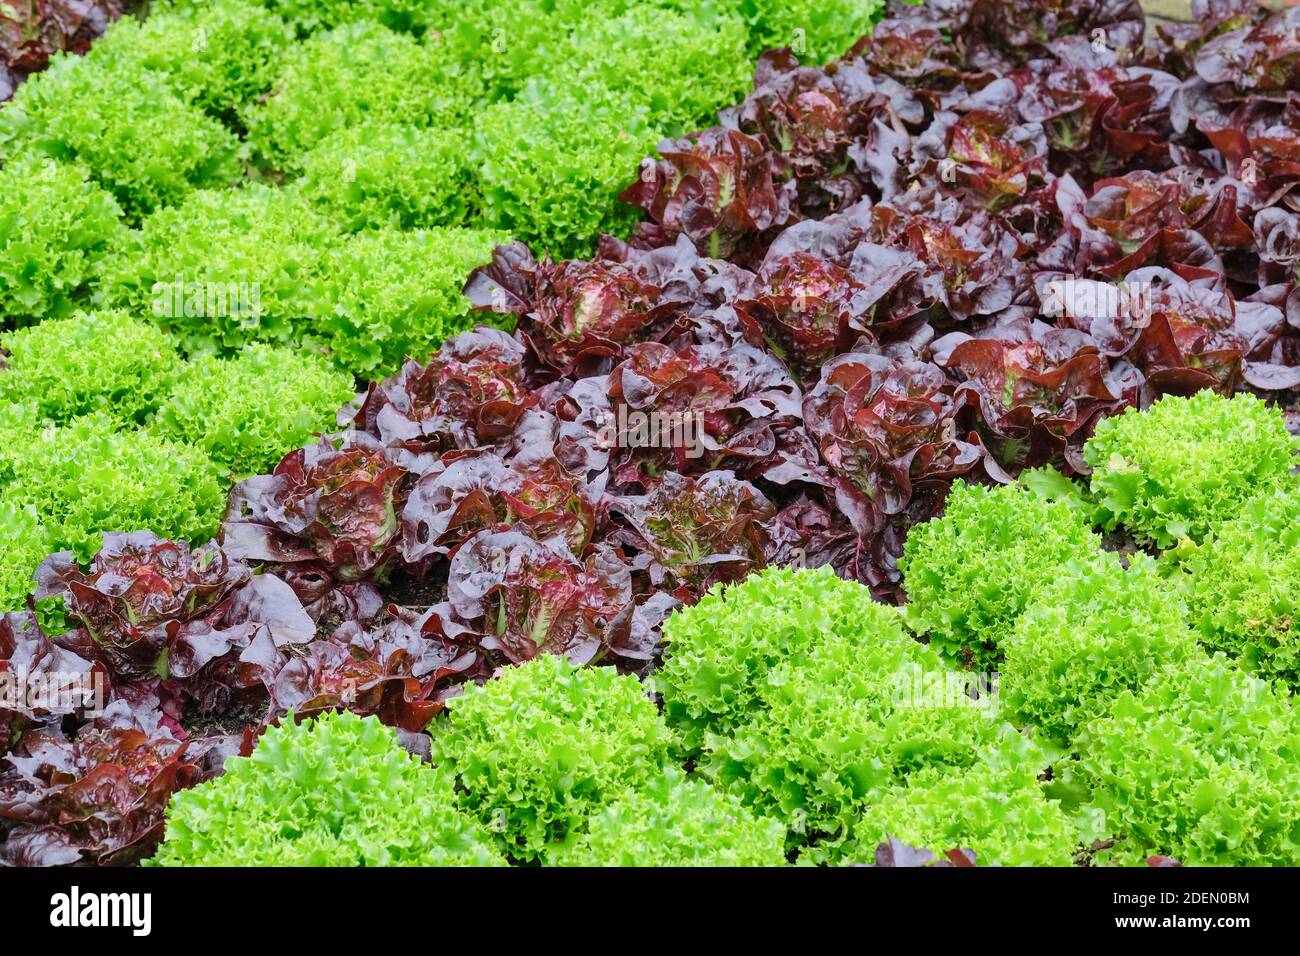 Loose-Leaf, grüner Salat 'azur' wächst mit rotblättrigen cos Salat, roter Salat 'Amaze'. Lactuca sativa ' mazur'. Lactuca sativa Amaze Stockfoto